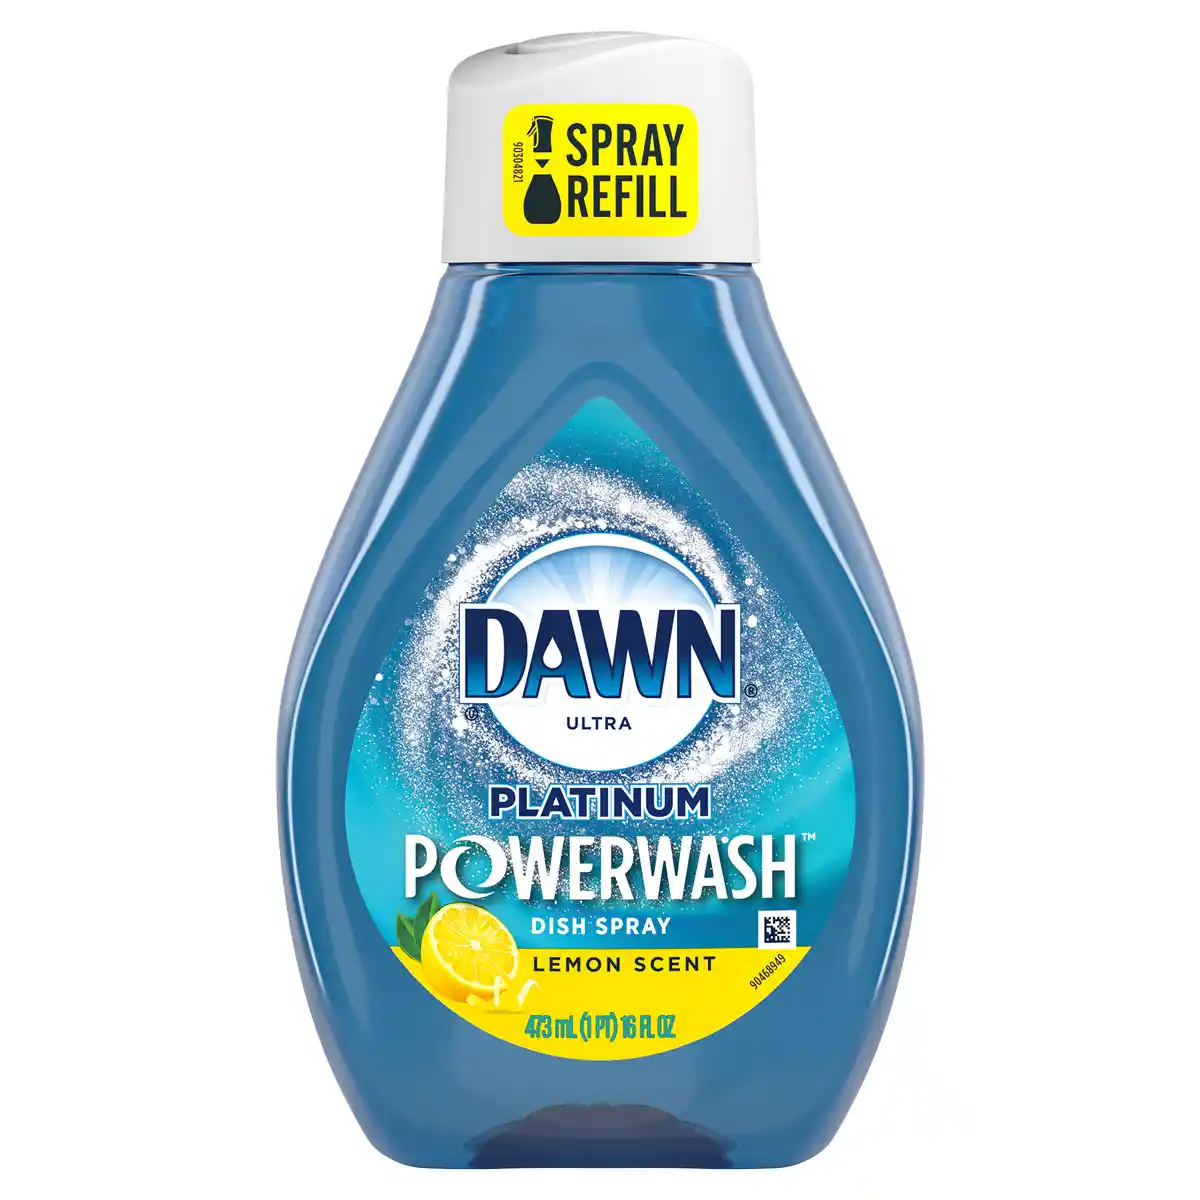 Dawn Platinum Powerwash Dish Spray, Dish Soap, Lemon Refill